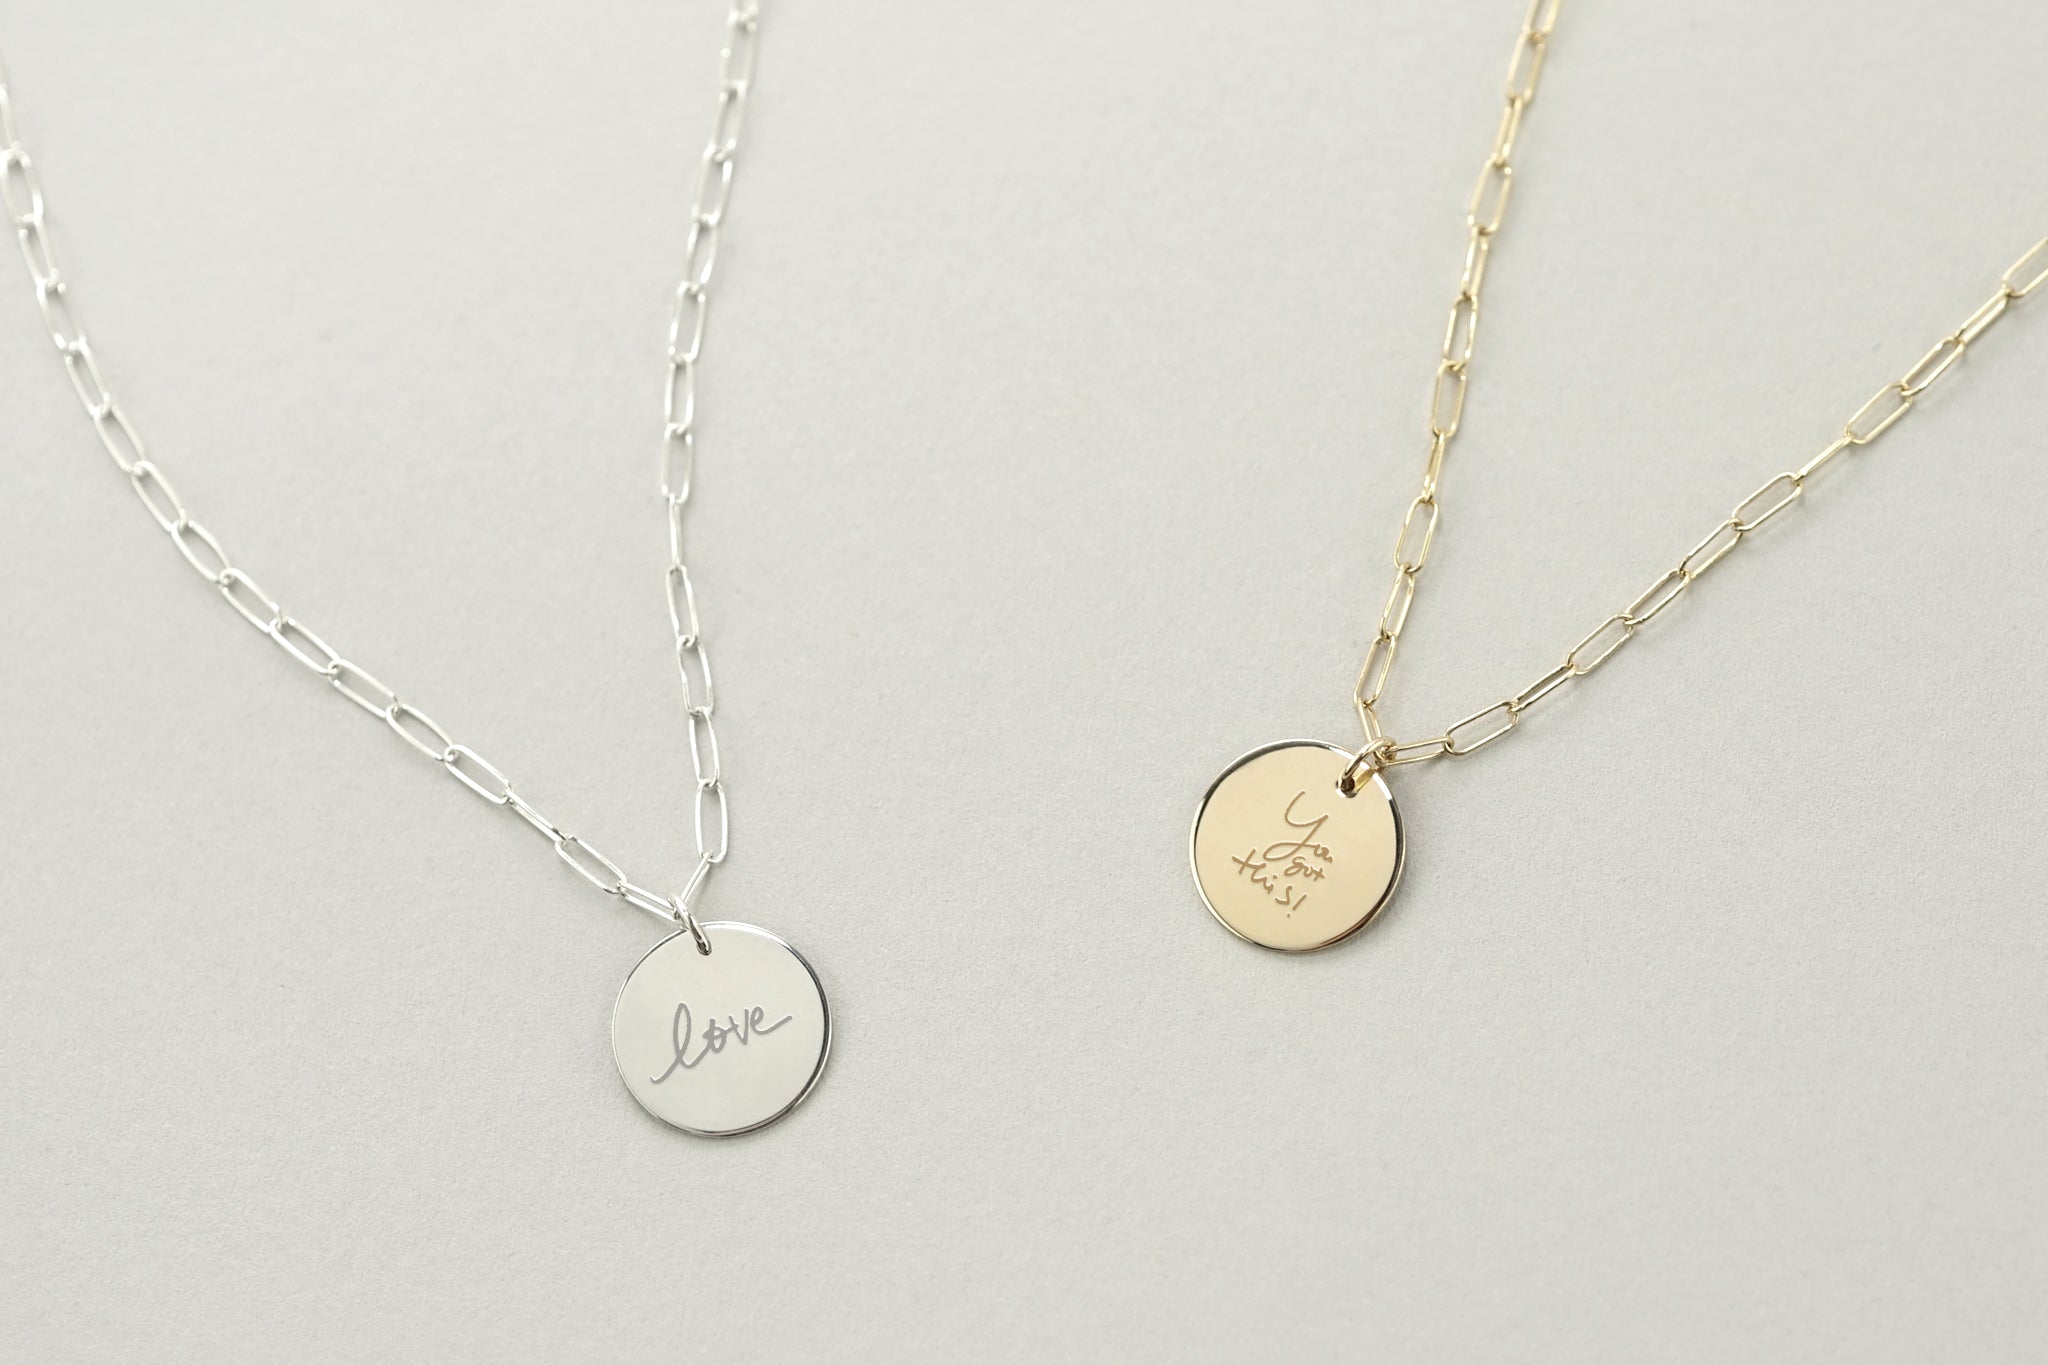 Custom Signature Name Necklace Handwriting Personalized Jewelry Gift Pendant  | eBay